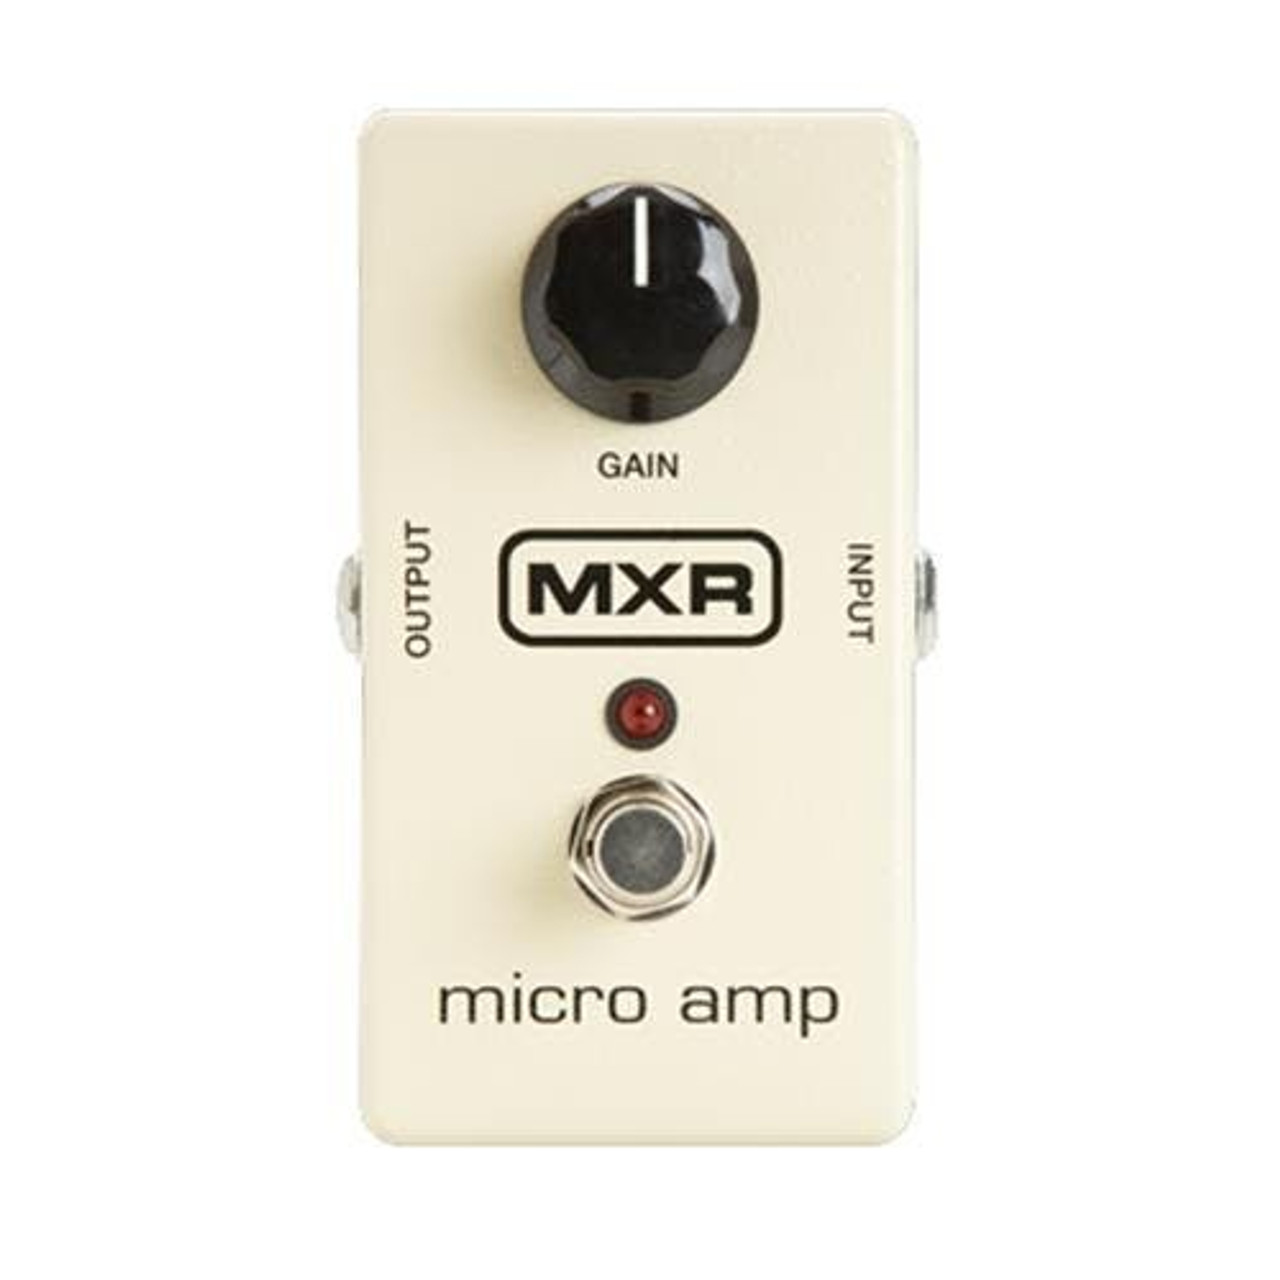 MXR Micro Amp Gain Boost Pedal M-133